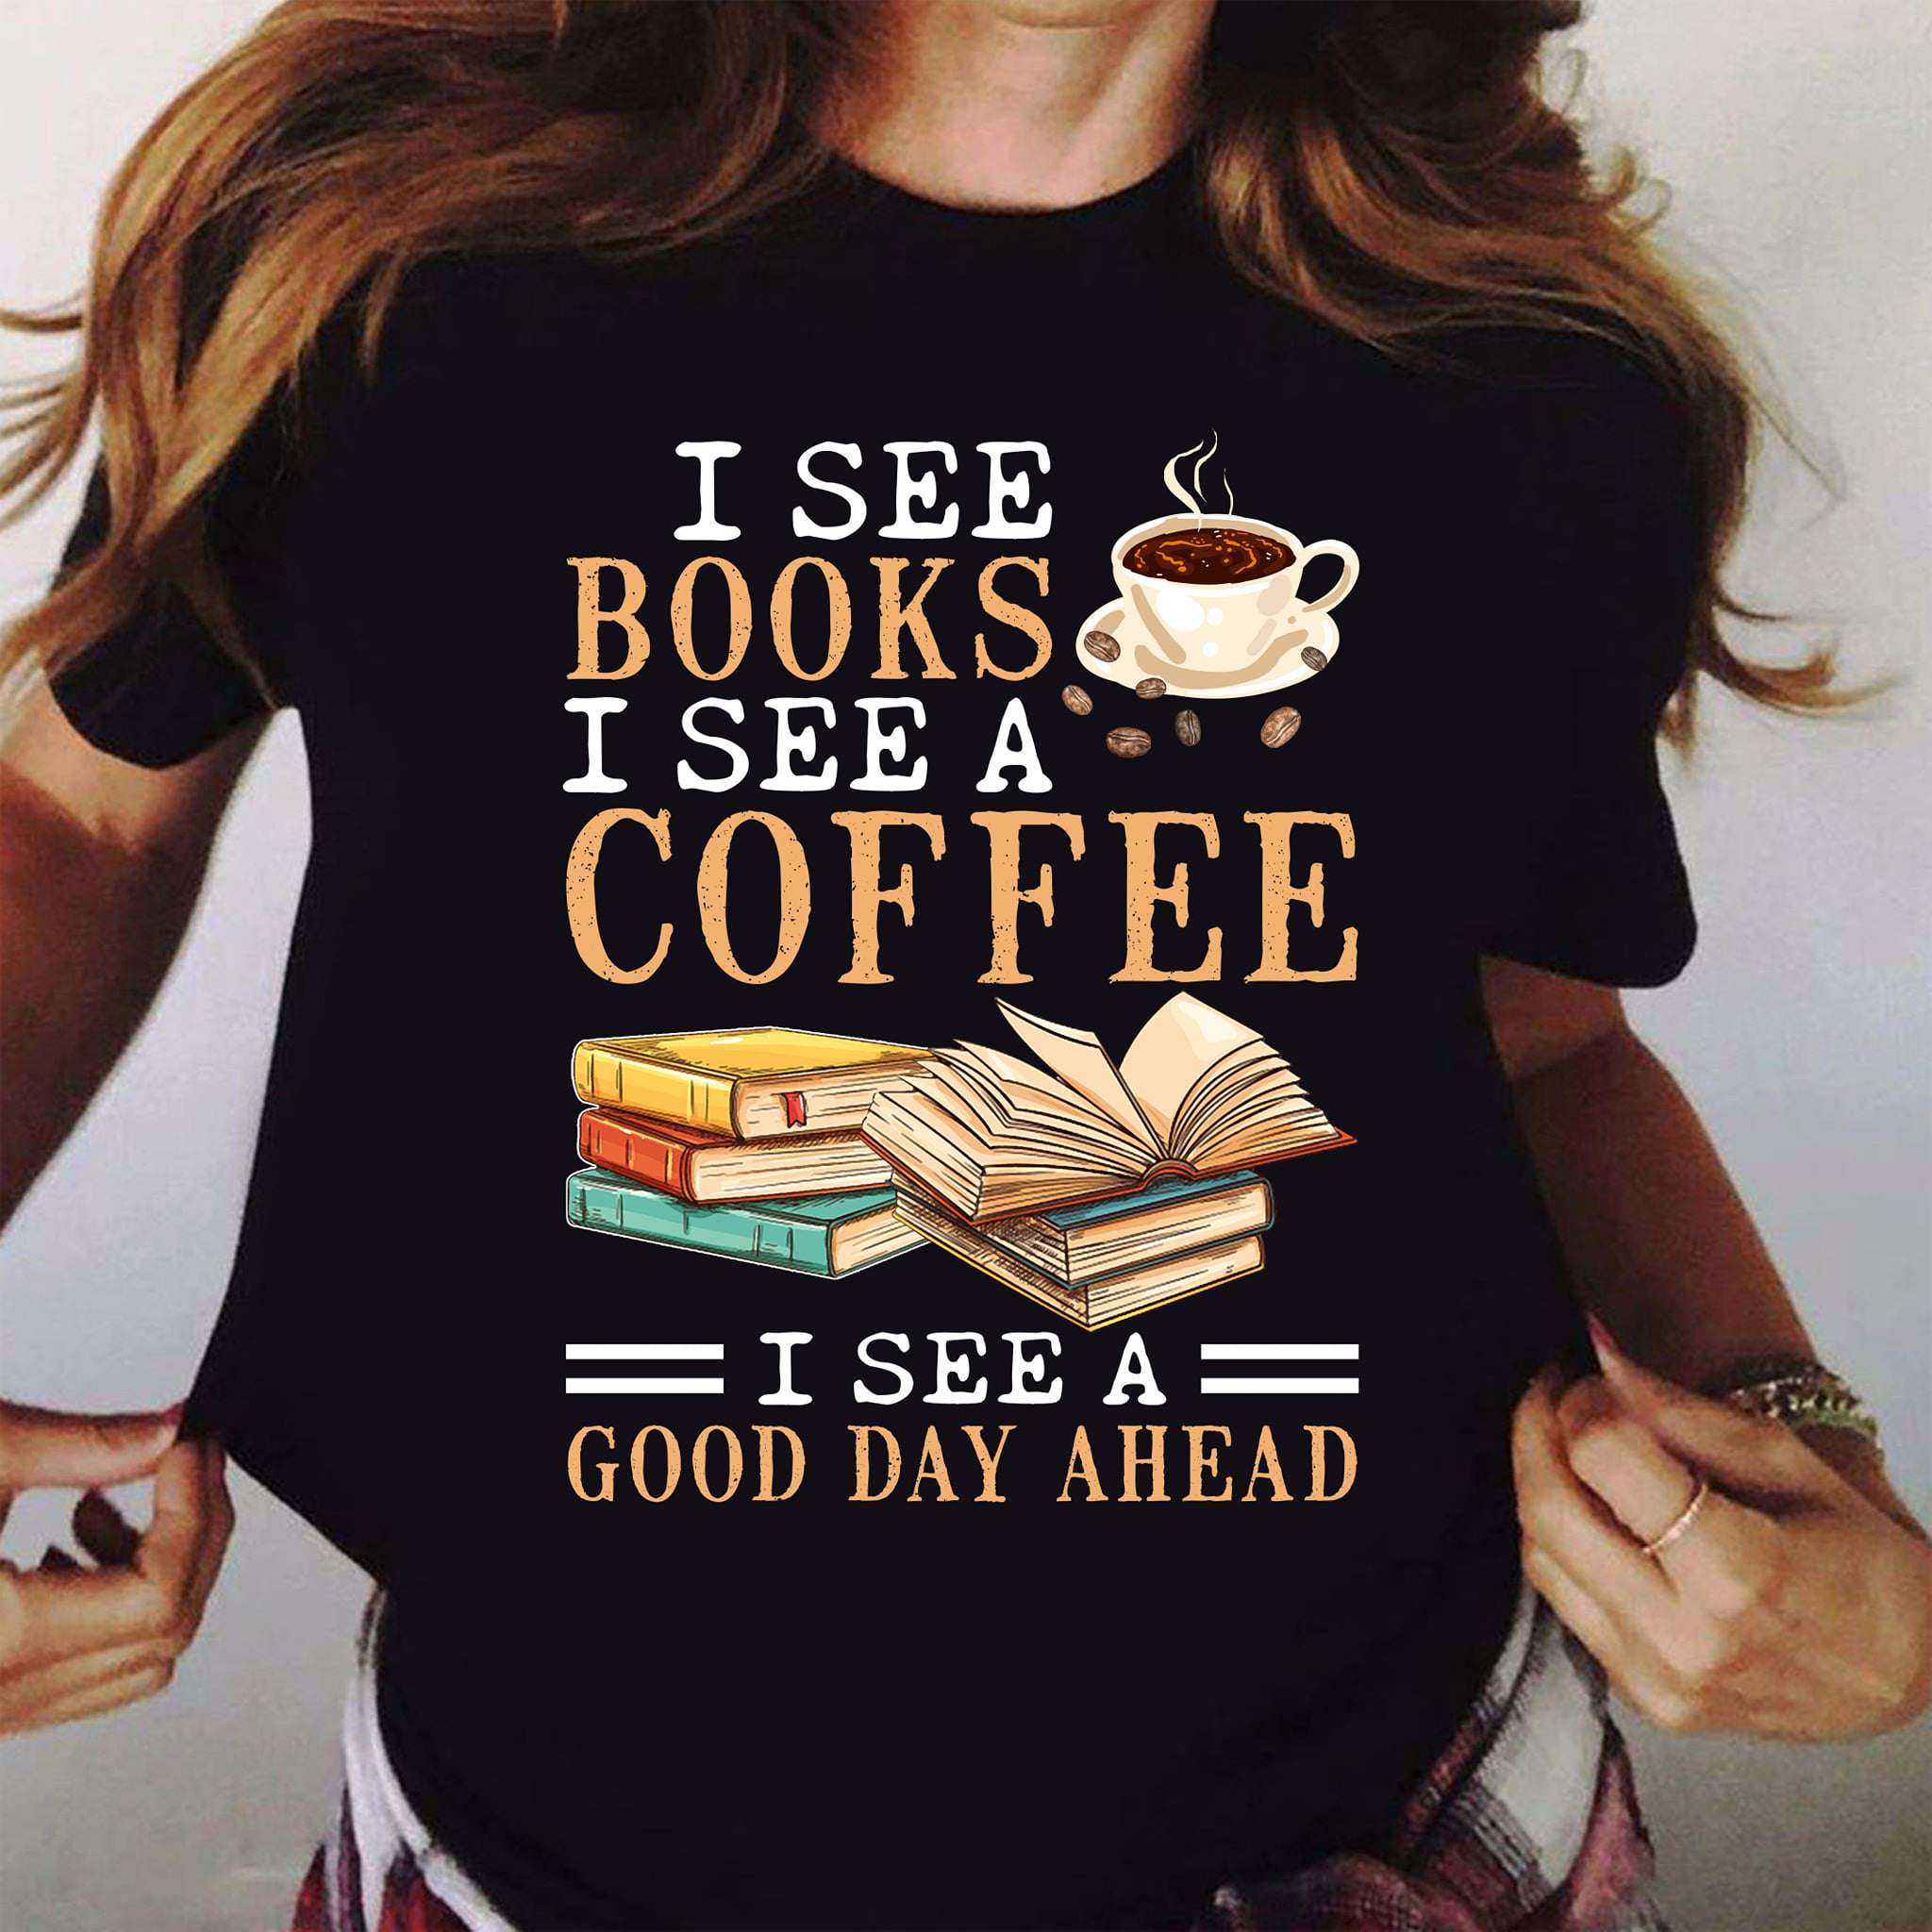 I see books I see a coffee I see a good day ahead - Book and coffee